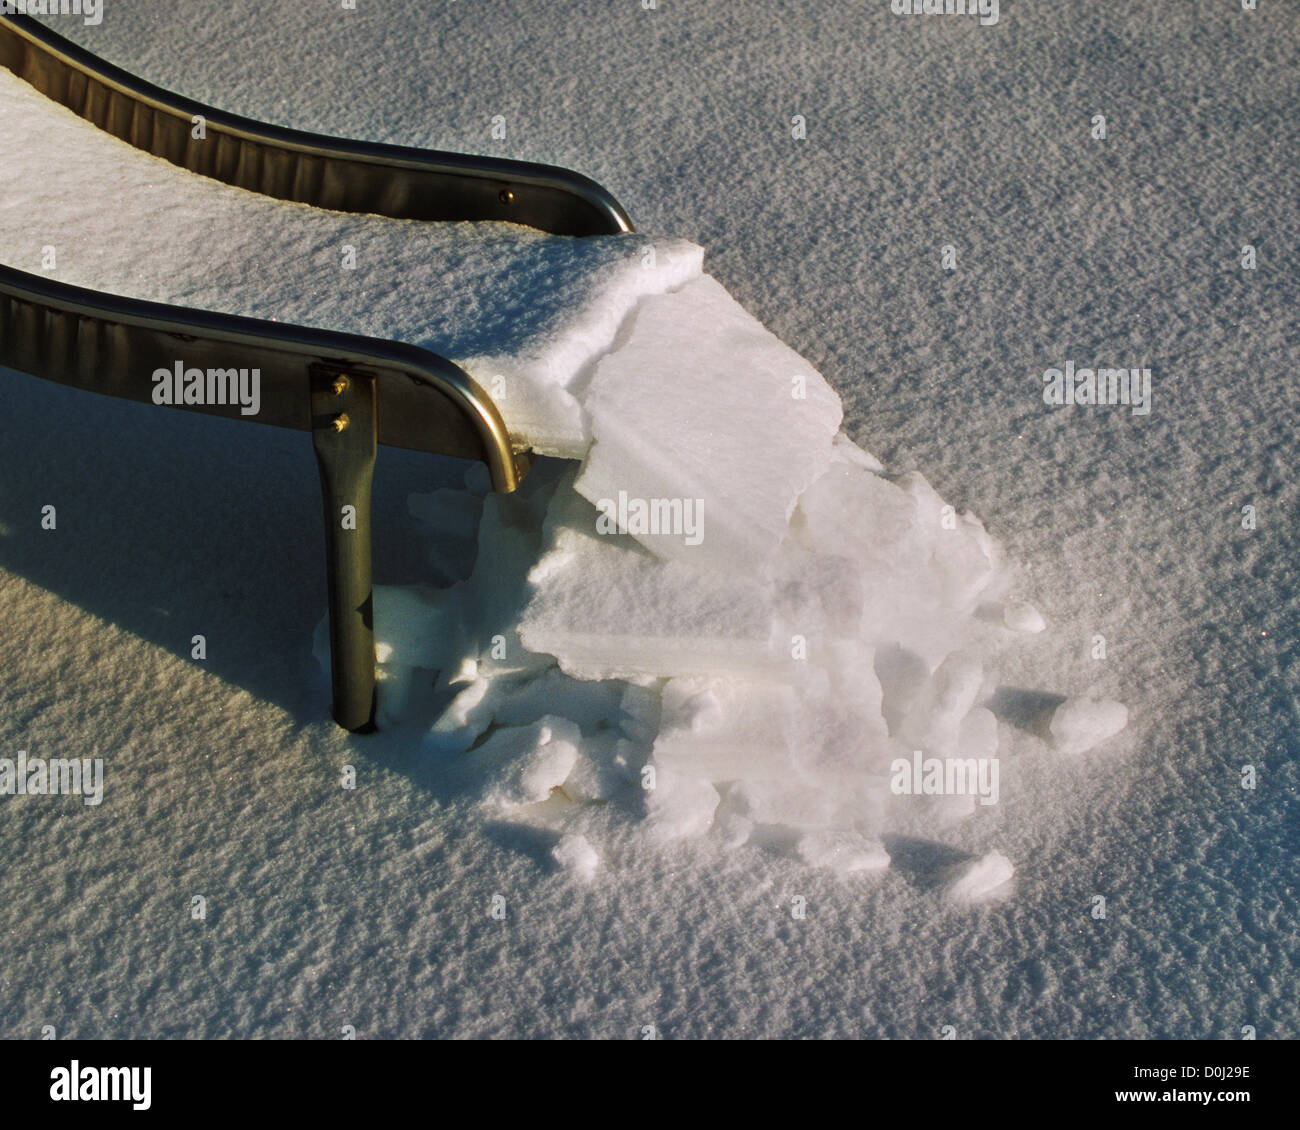 Snow Slides Down a Slide Stock Photo